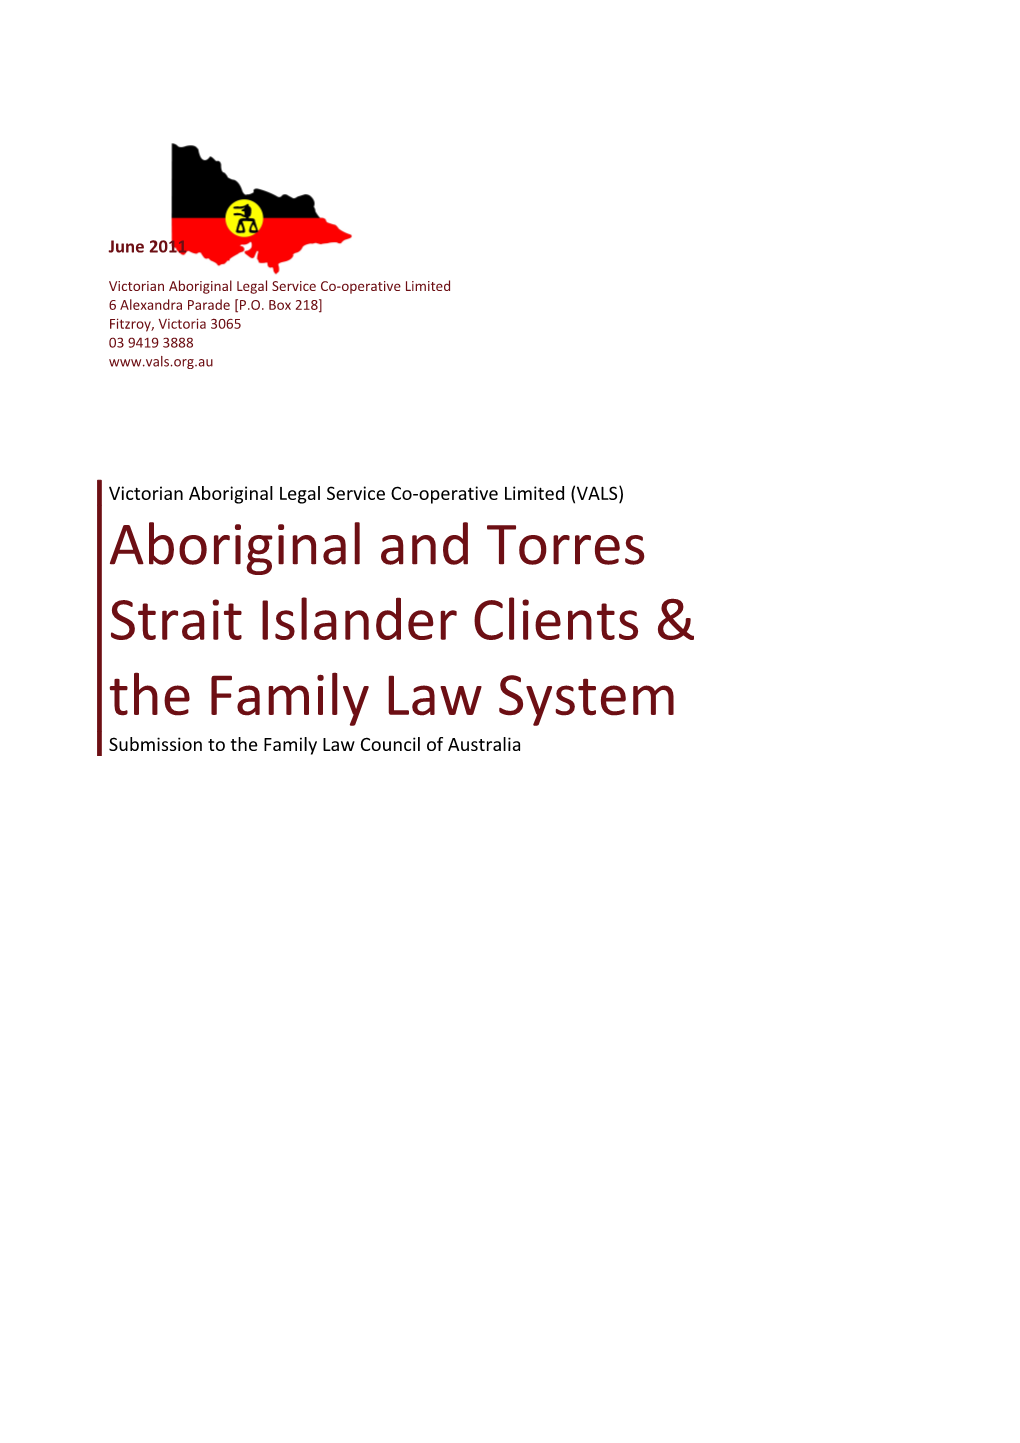 Victorian Aboriginal Legal Service Co-Operative Limited (VALS)